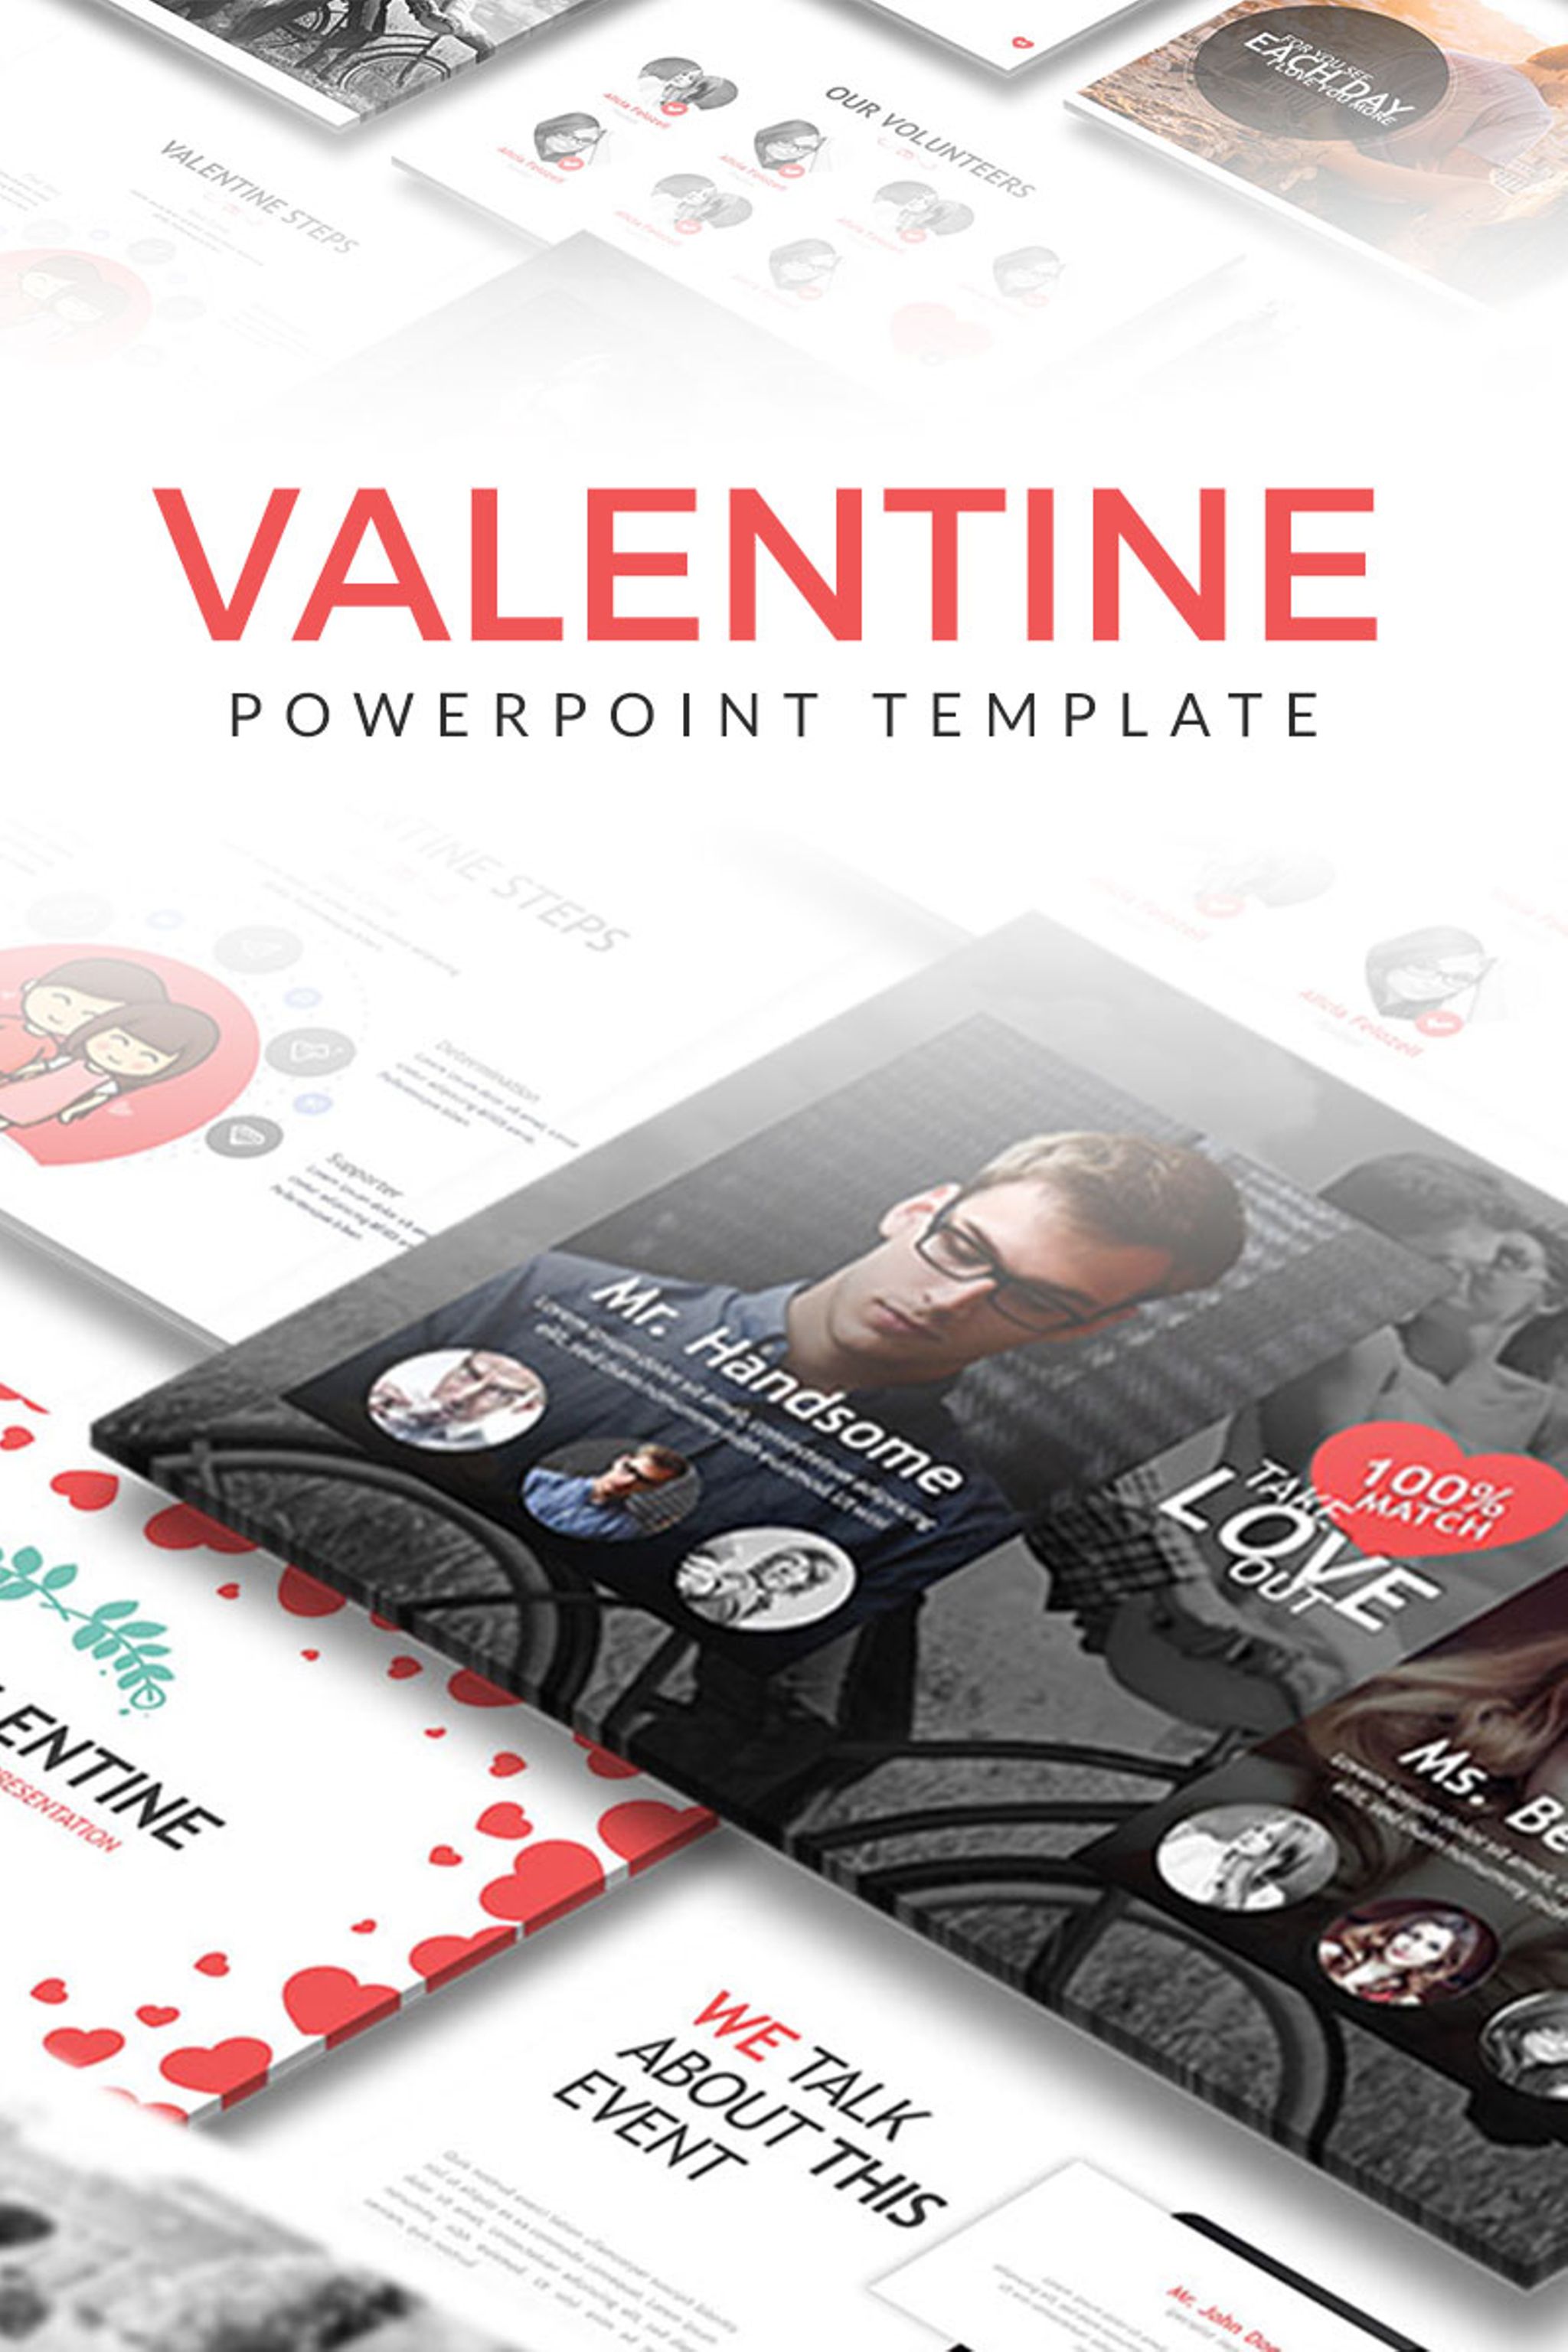 Sweet Valentine PowerPoint template